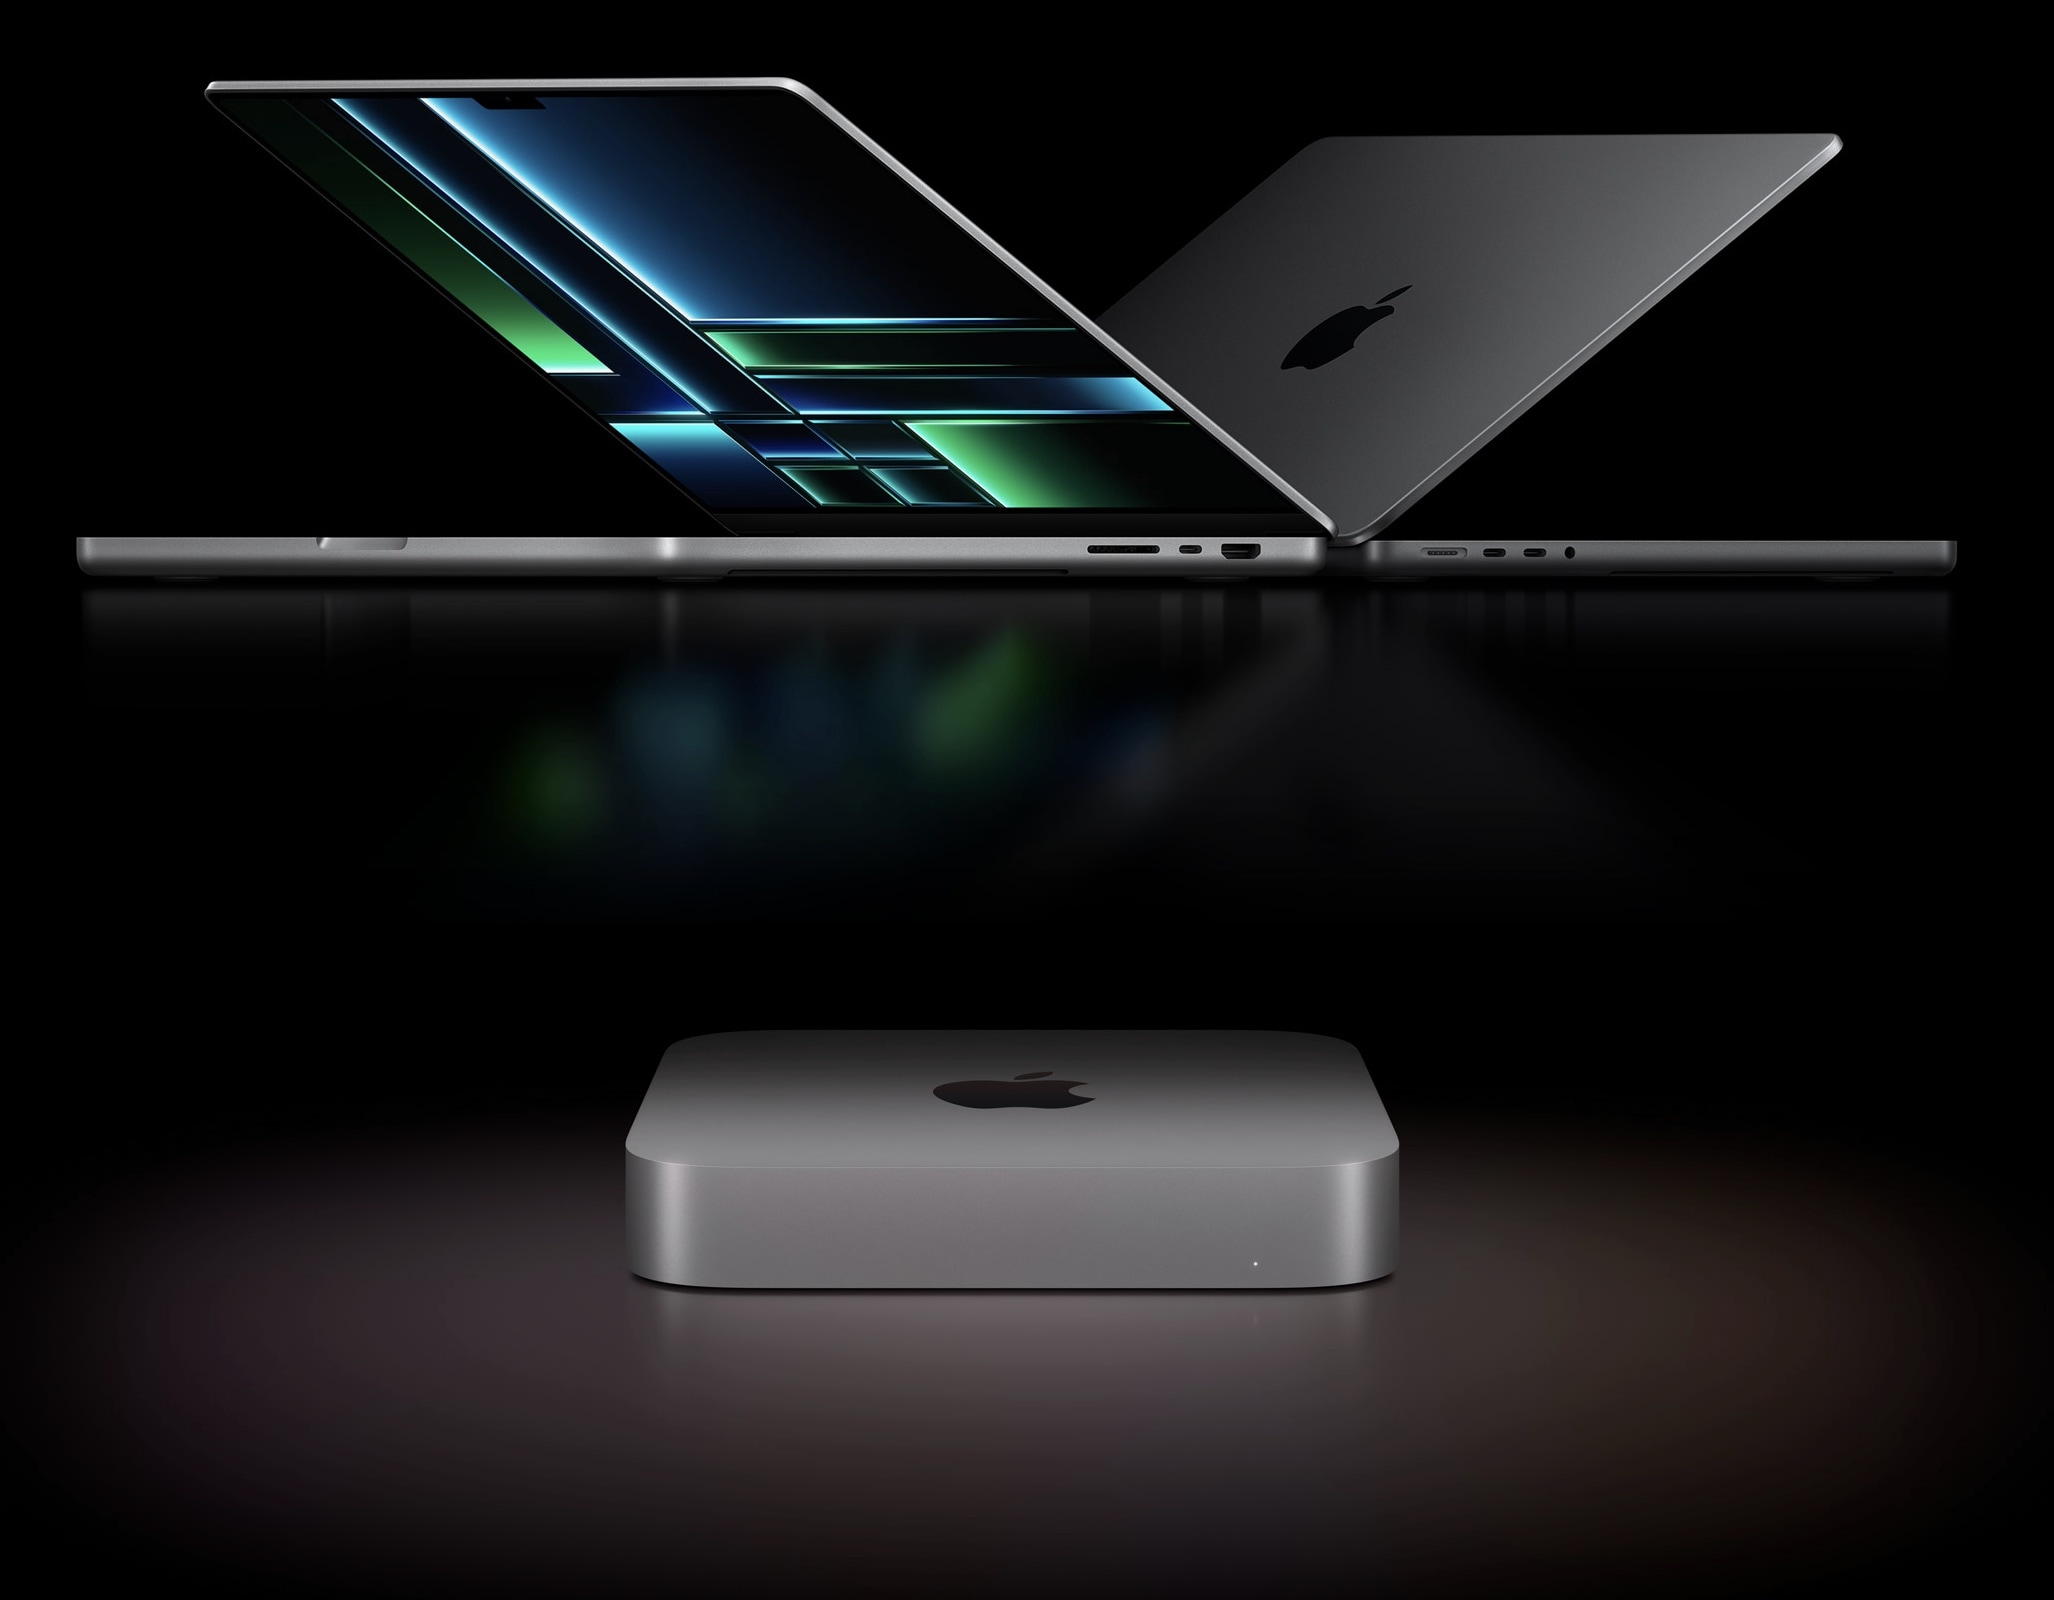 Mac Pro now Apple’s last Intel-based Mac following Tuesday’s MacBook Pro & Mac mini refresh